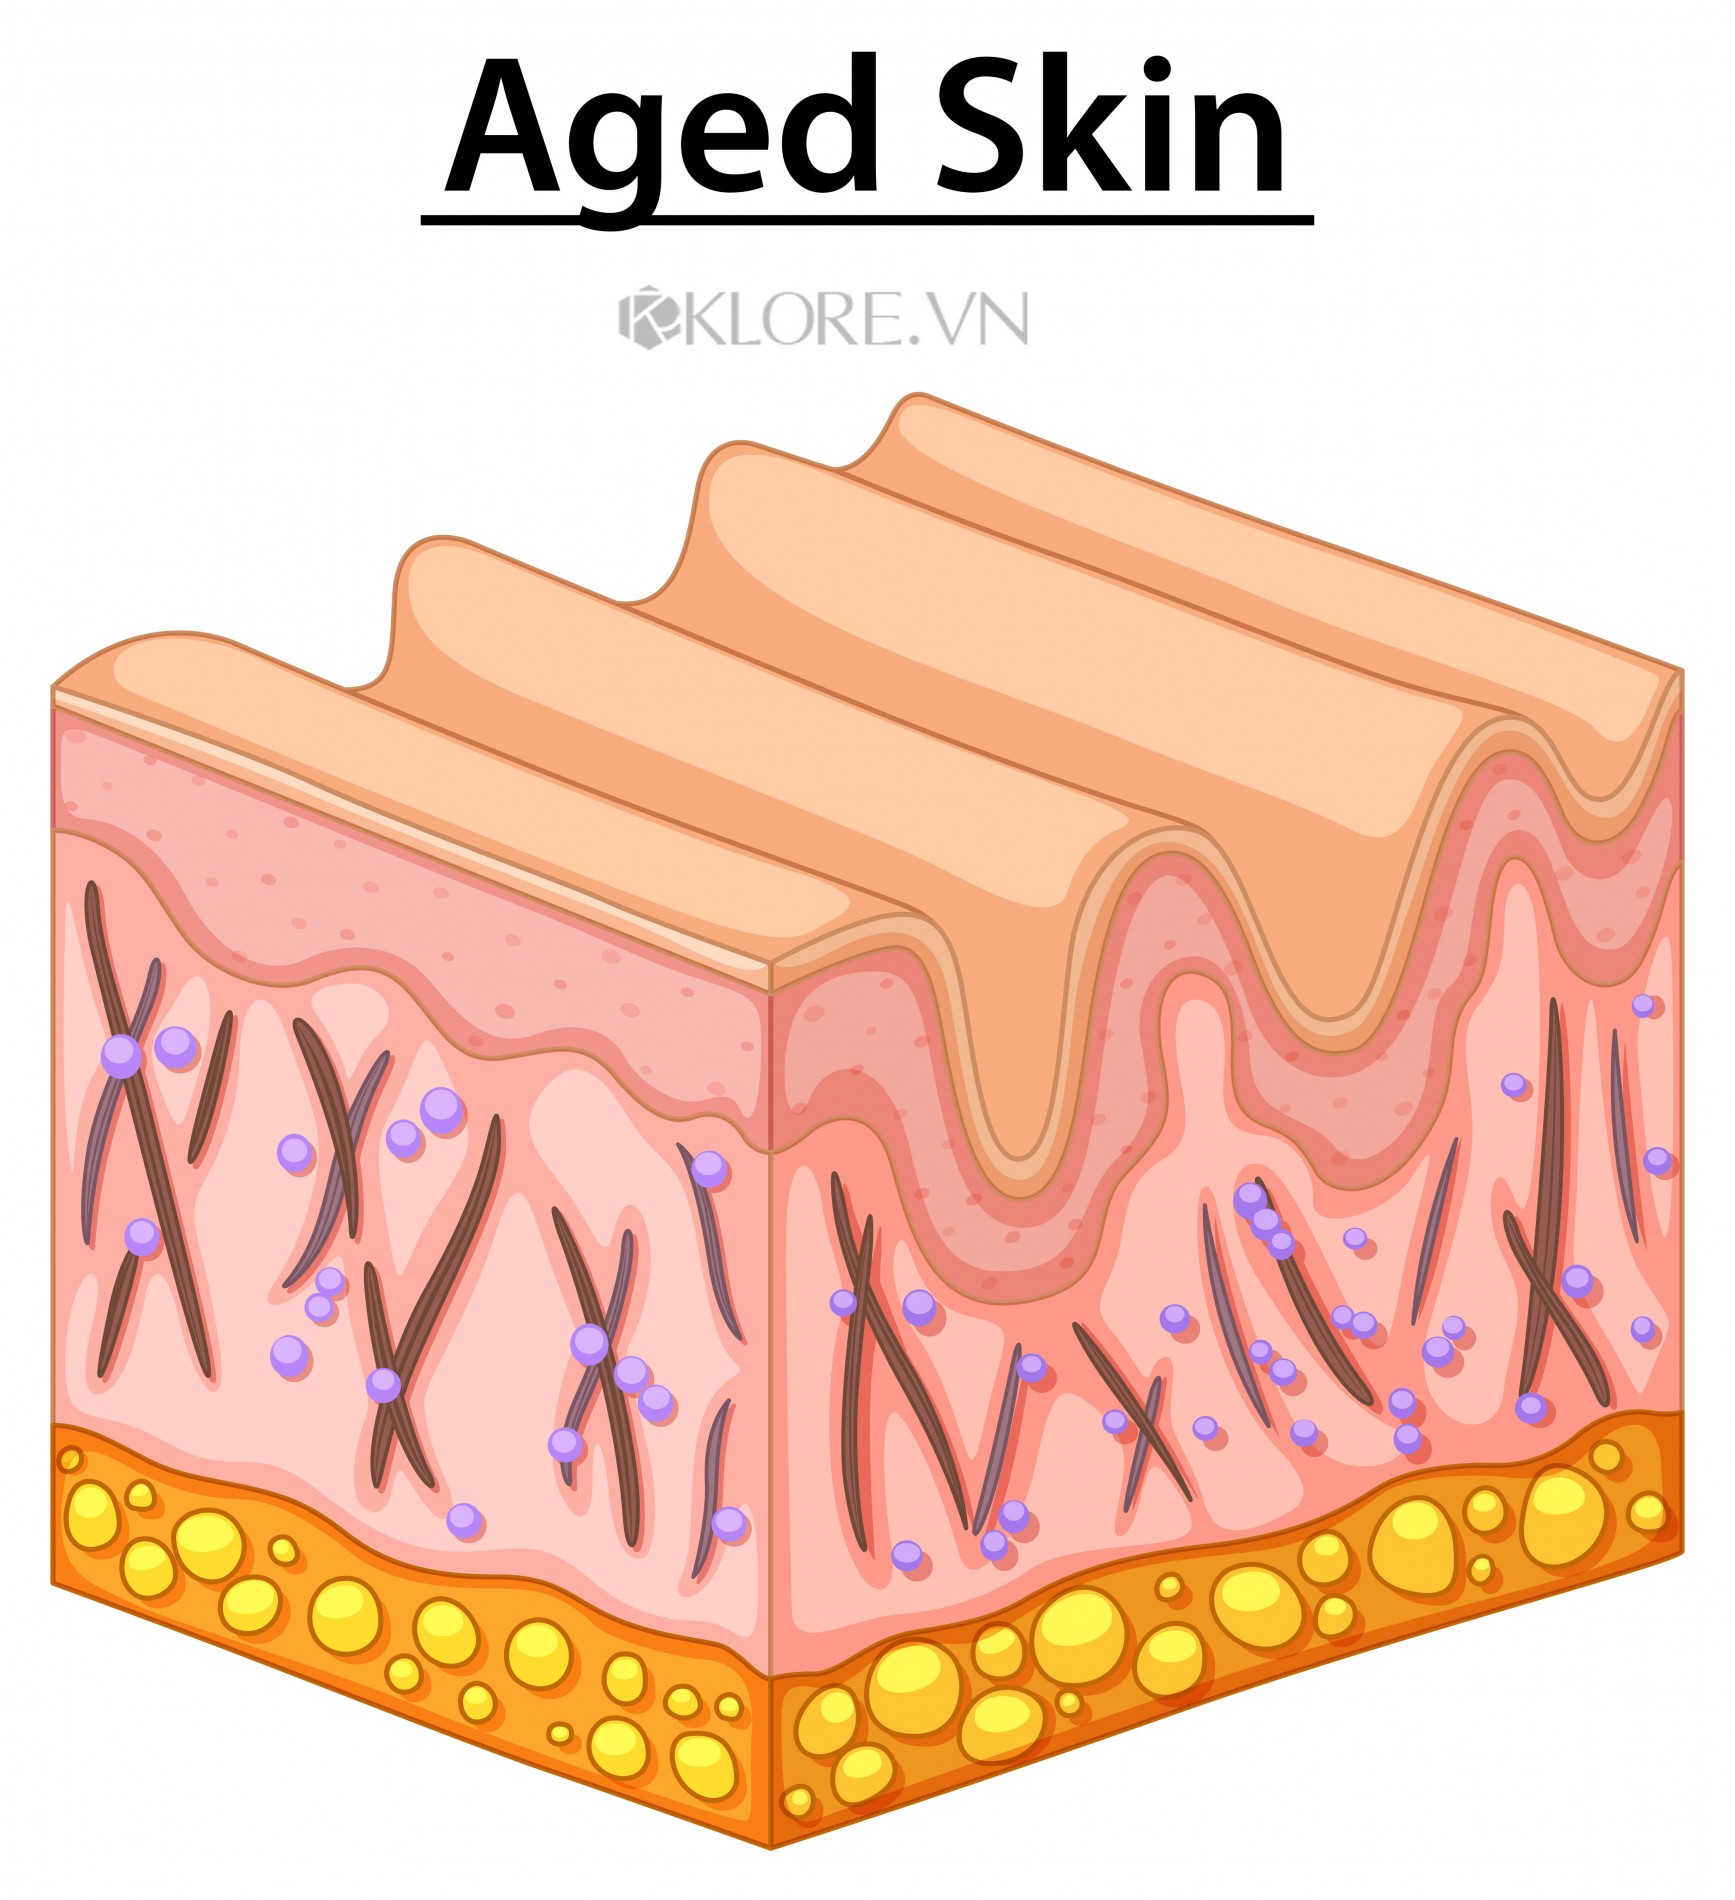 aged_skin